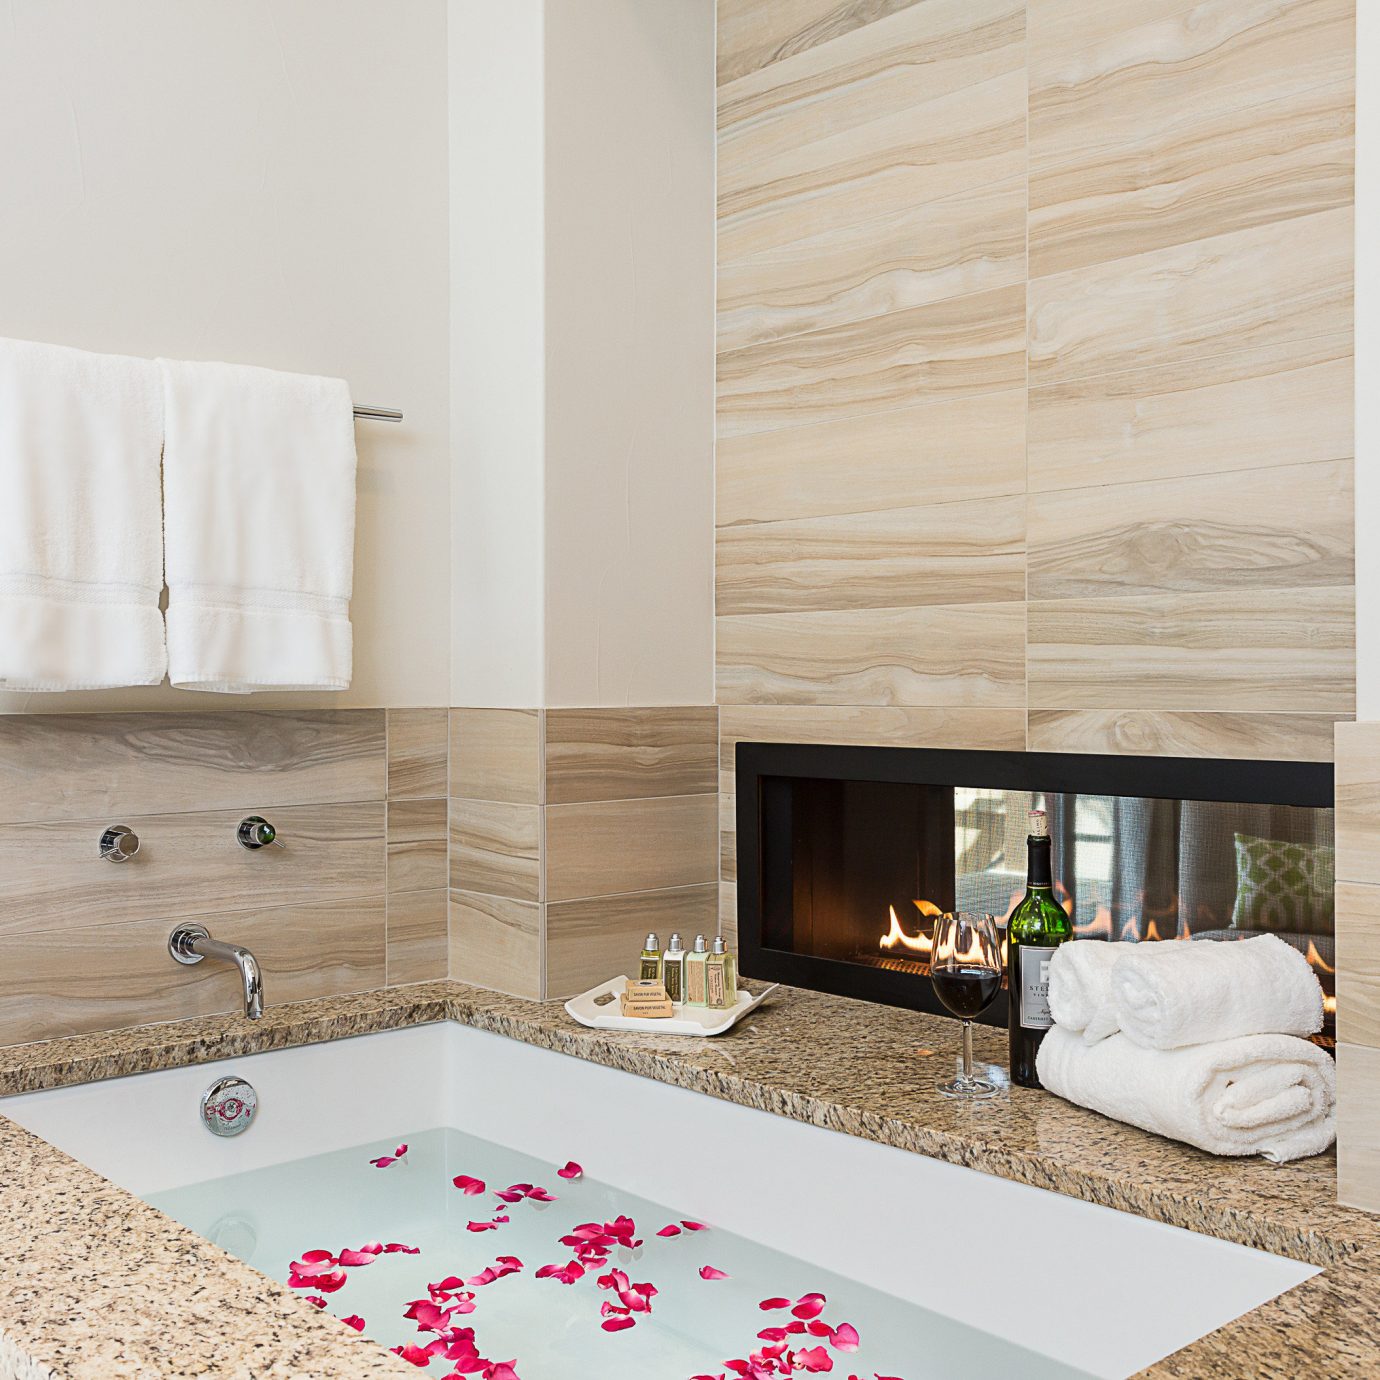 Bath Country Luxury flooring bathroom bathtub tile wood flooring laminate flooring plumbing fixture